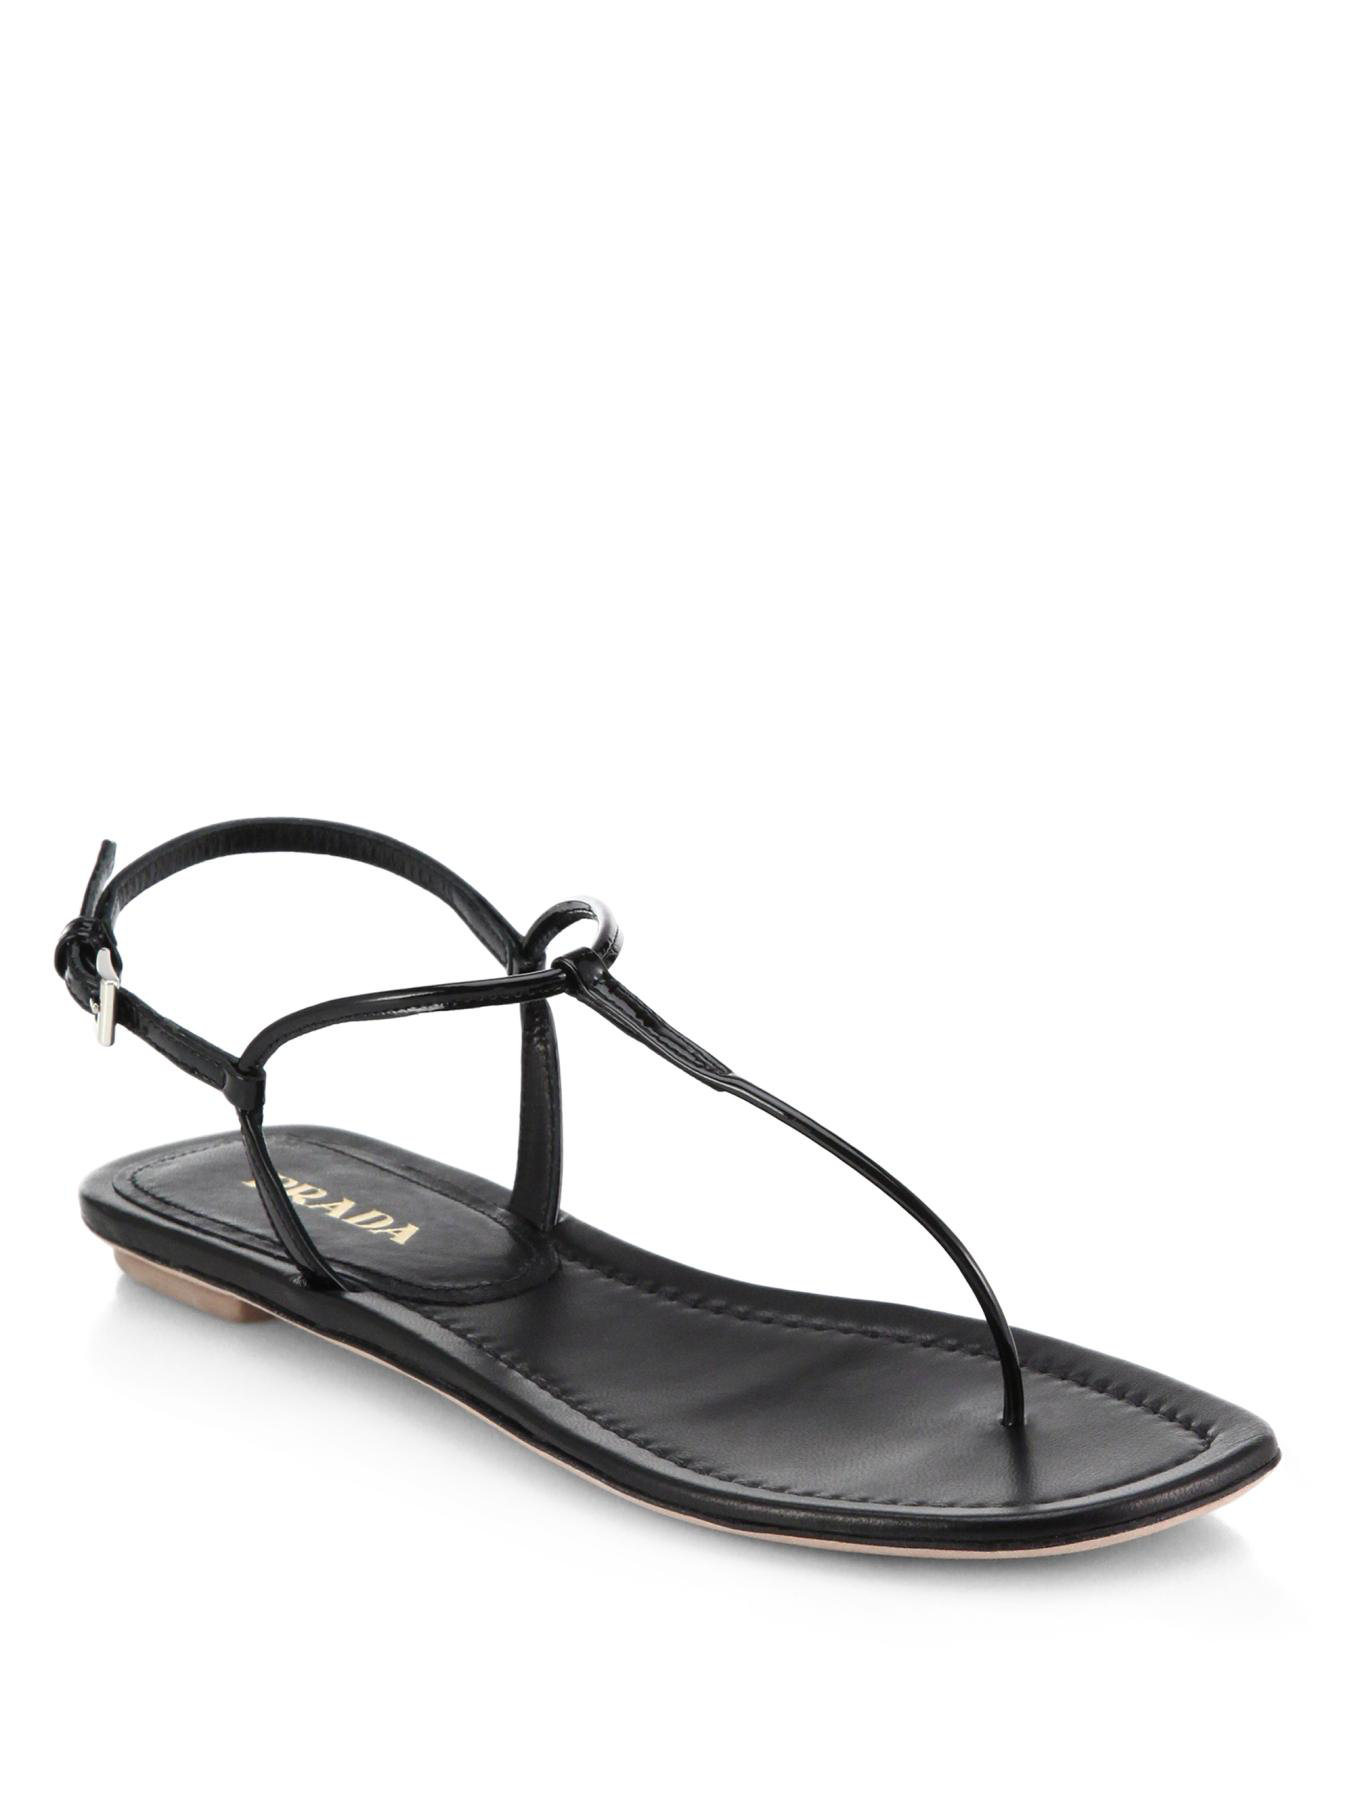 Prada Leather Thong Sandals in Black - Lyst